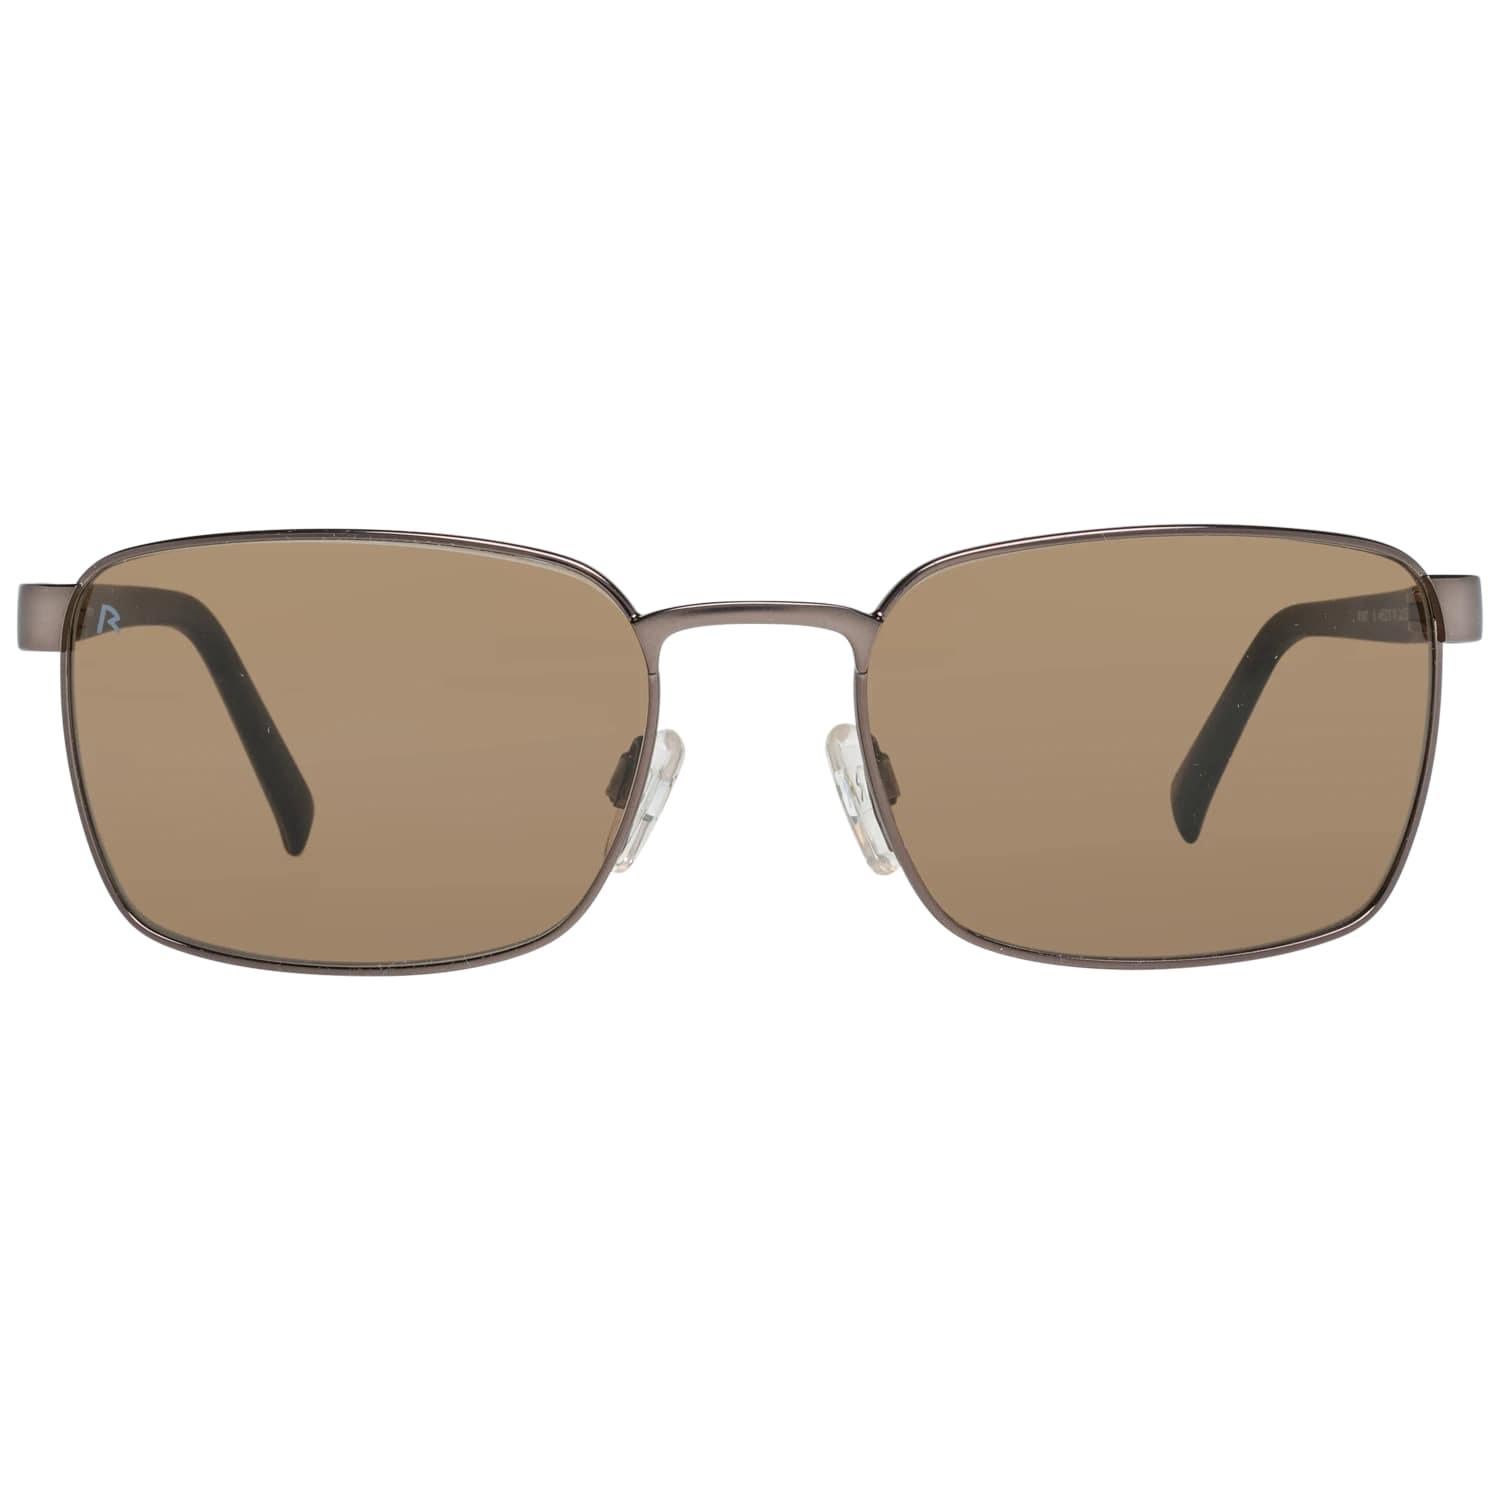 Rodenstock Mint Unisex Brown Sunglasses R1417 B 56 56-19-139 mm 1